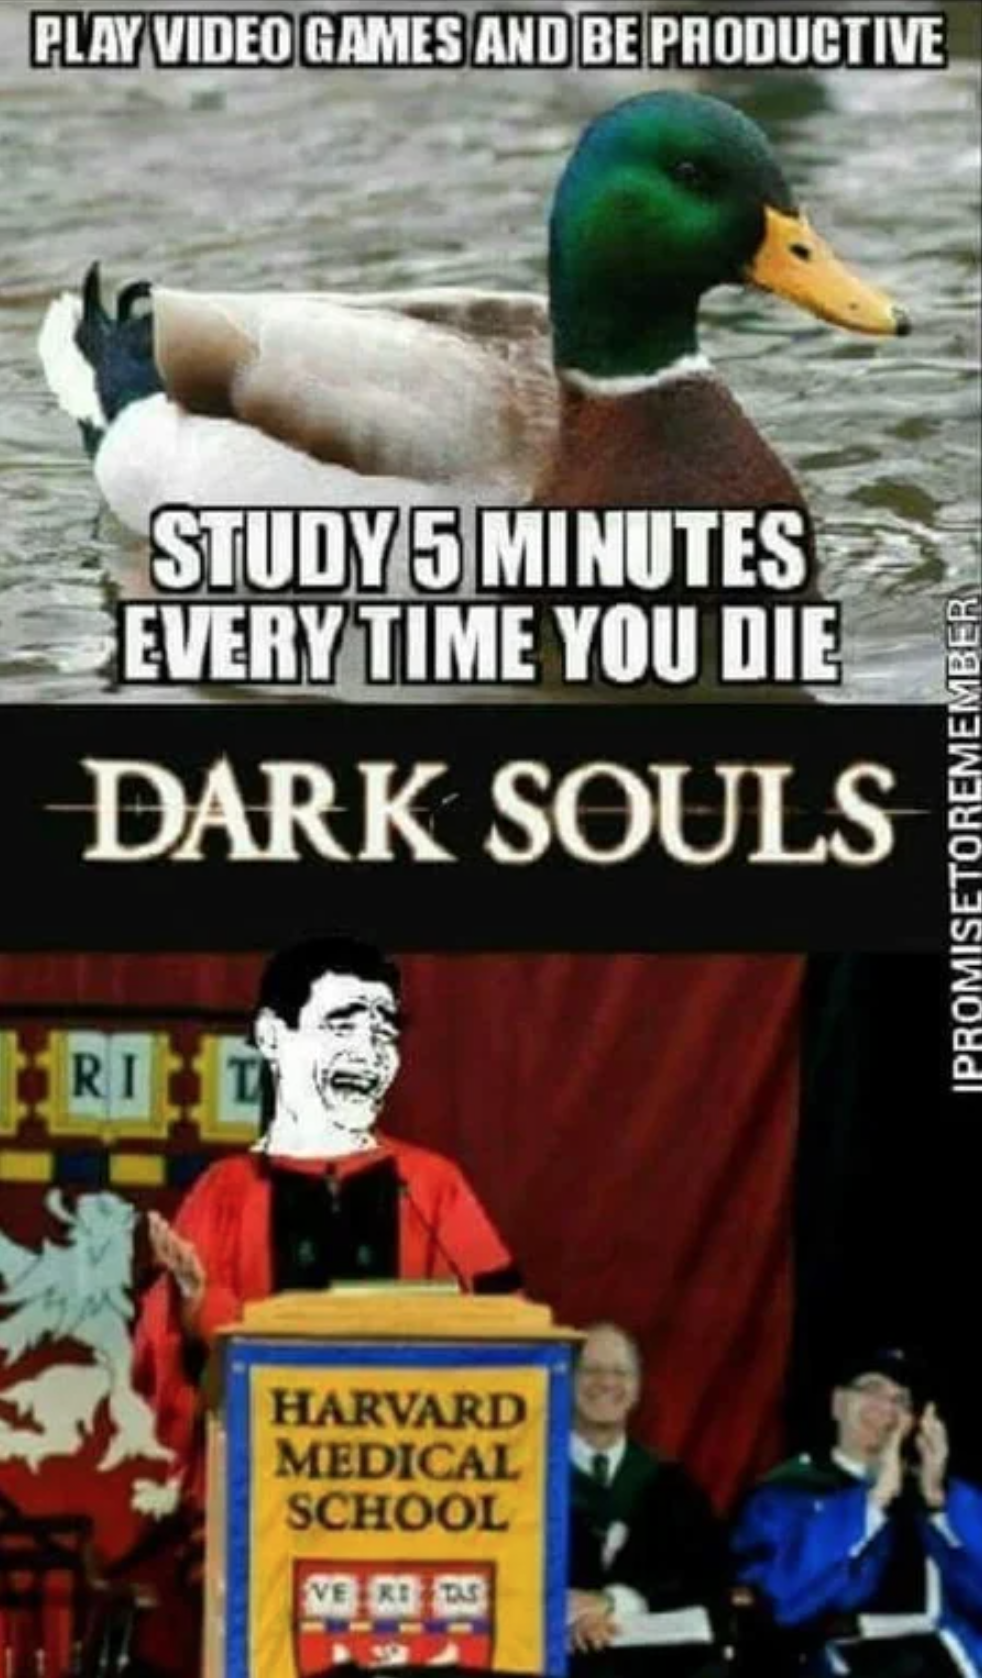 funny gaming memes - dark souls memes - Play Video Games And Be Productive STUDY5 Minutes Every Time You Die Dark Souls Ipromisetoremember Ri Harvard Medical School O De